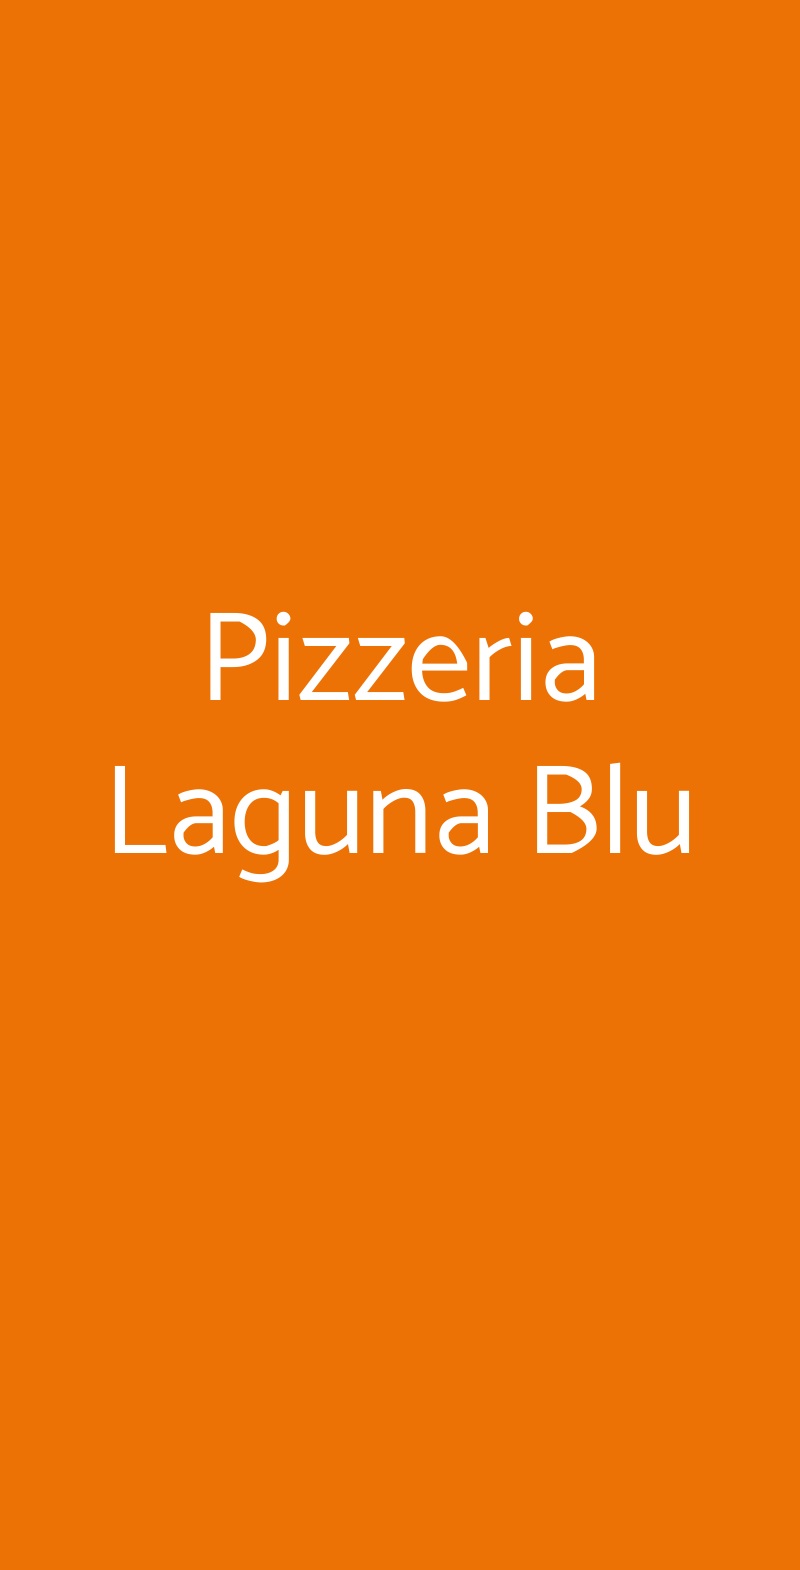 Pizzeria Laguna Blu Milano menù 1 pagina